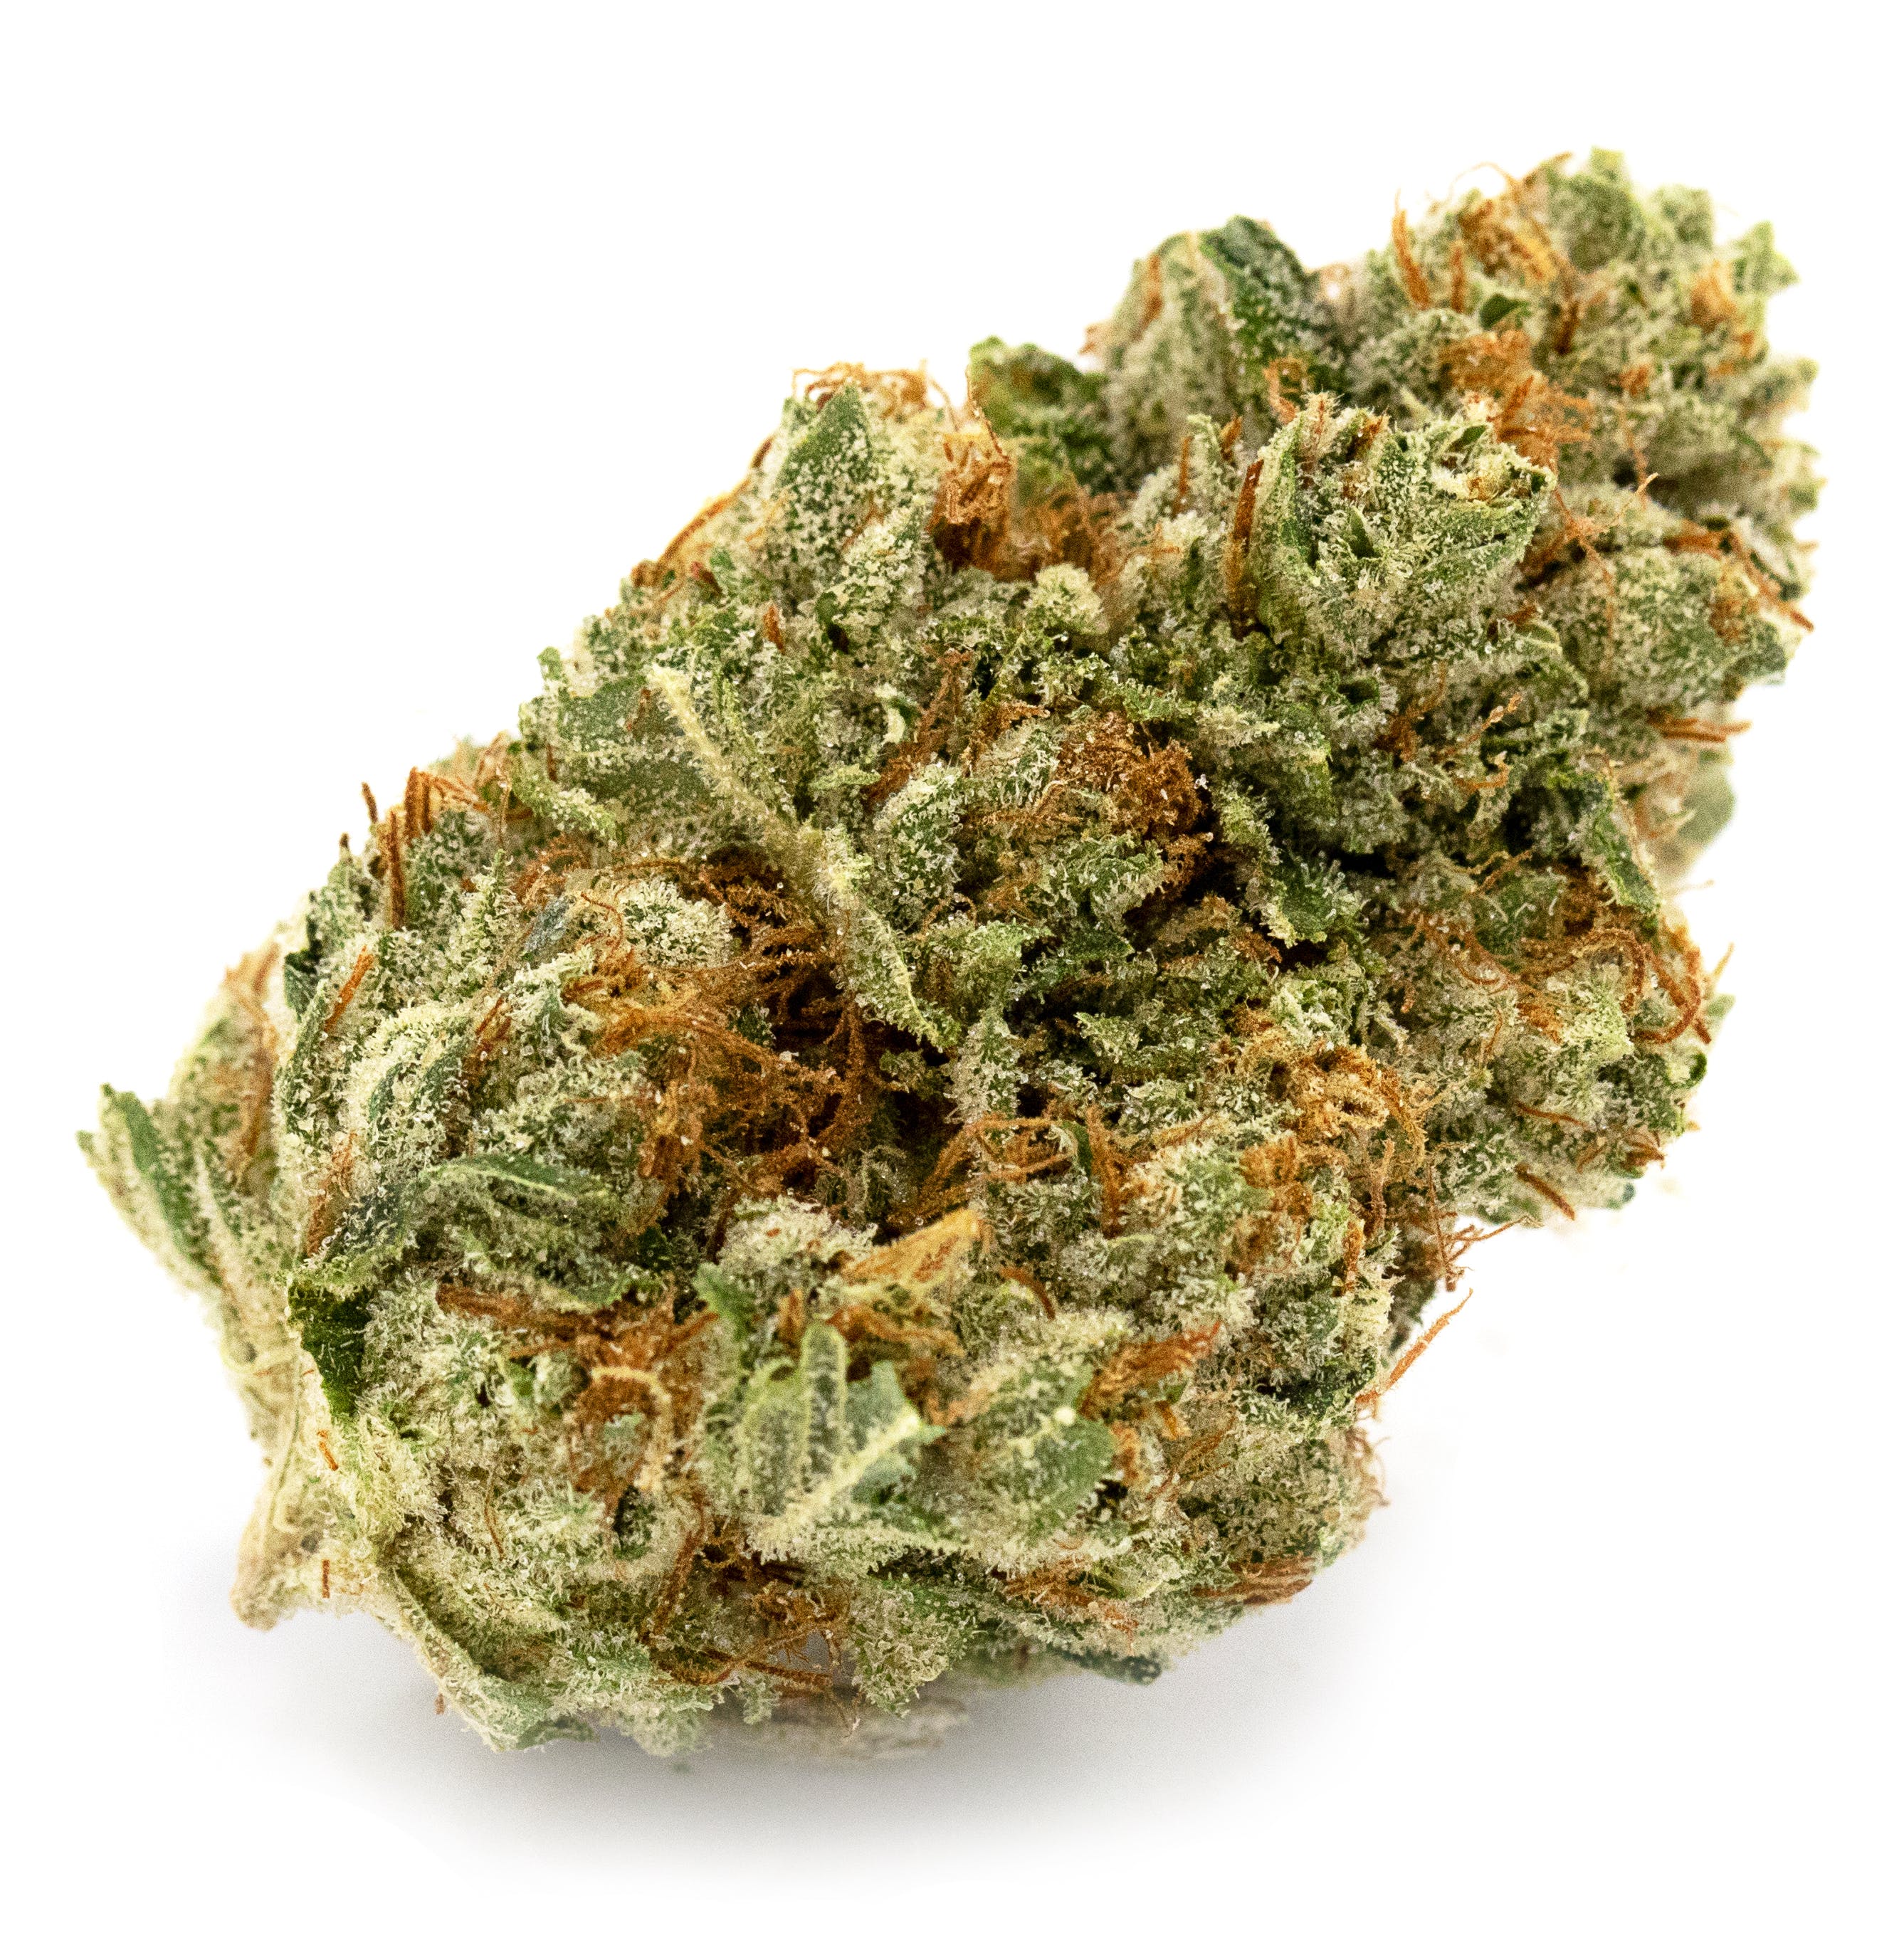 marijuana-dispensaries-dtpg-in-los-angeles-source-og